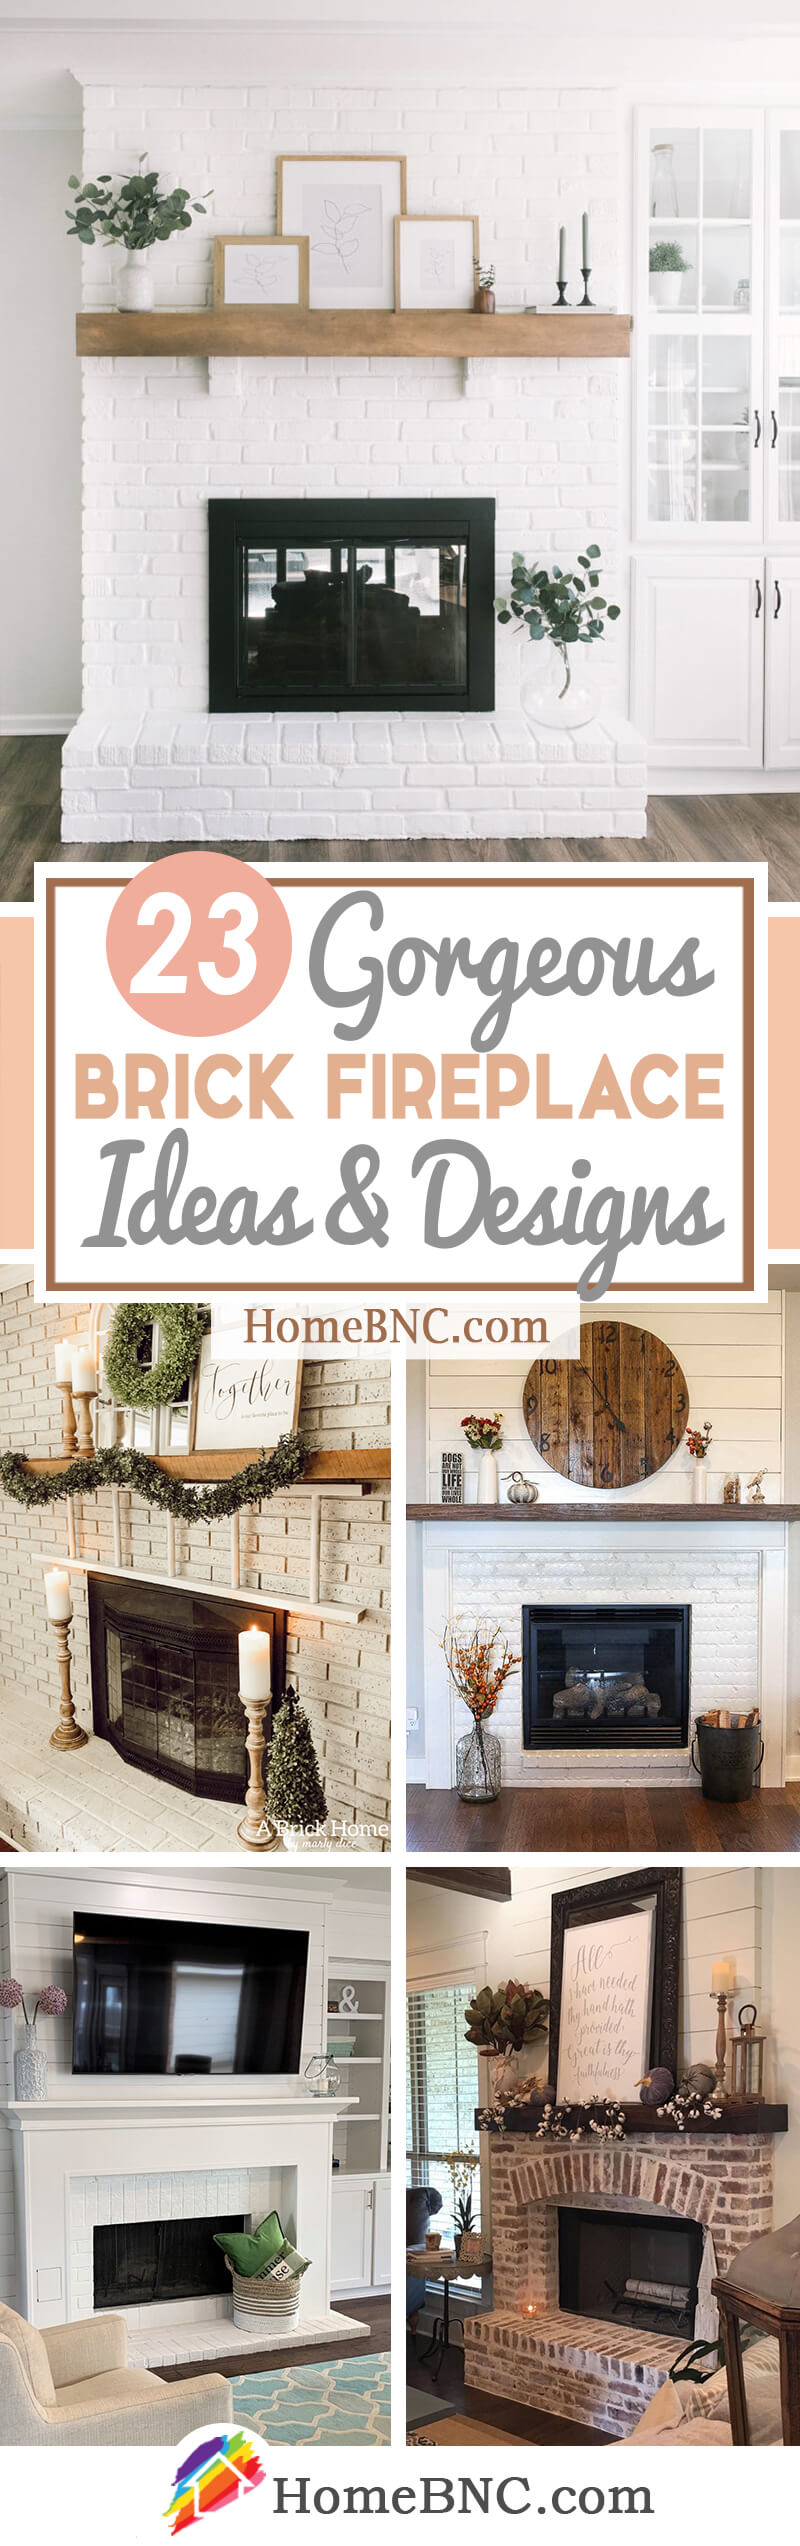 Brick Fireplace Ideas